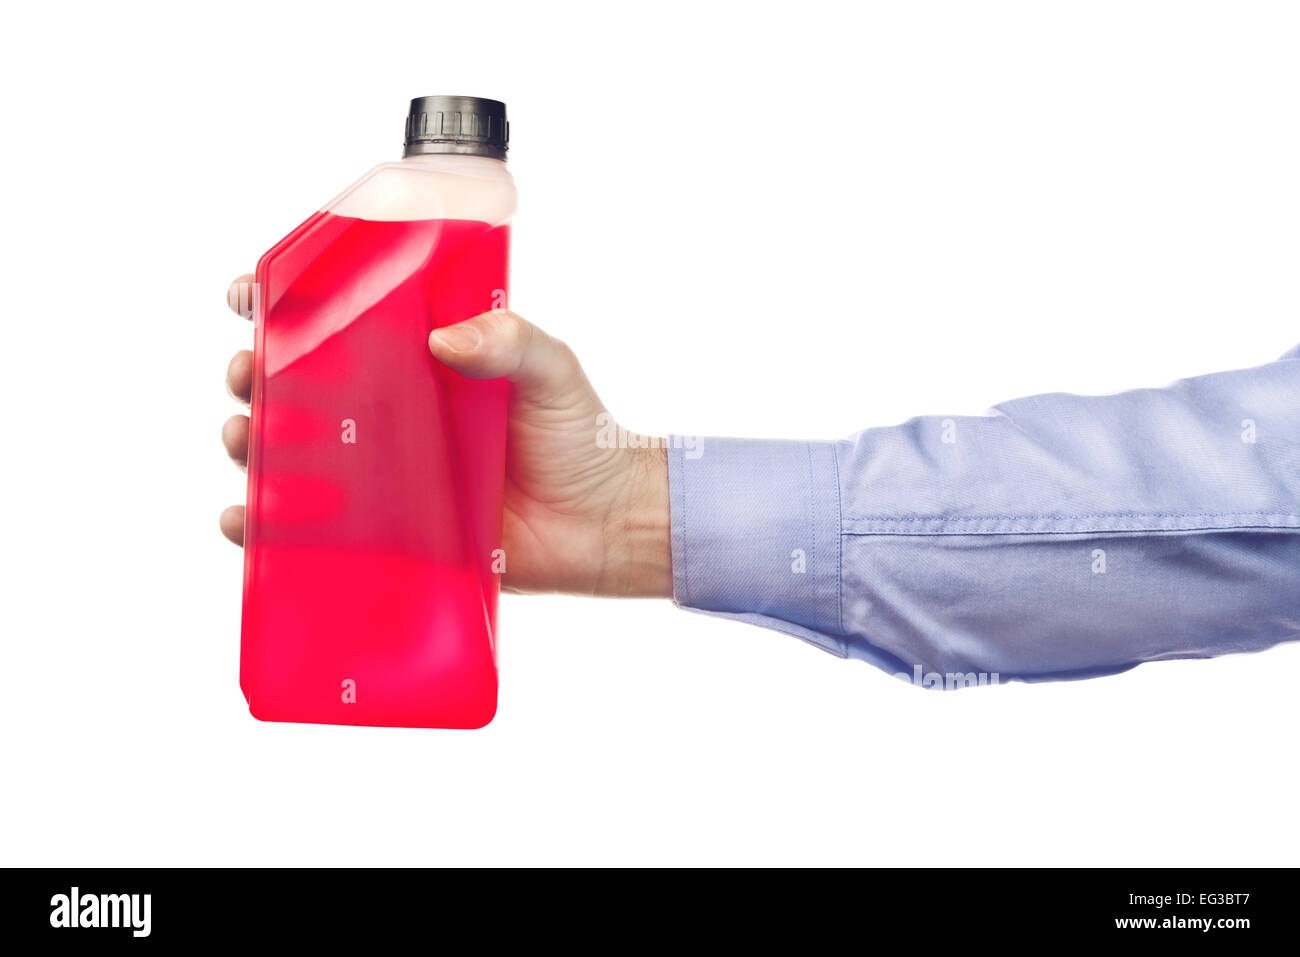 Male hand holding a bottle of antifreeze additive water-based liquid, isolated on white background. Stock Photo